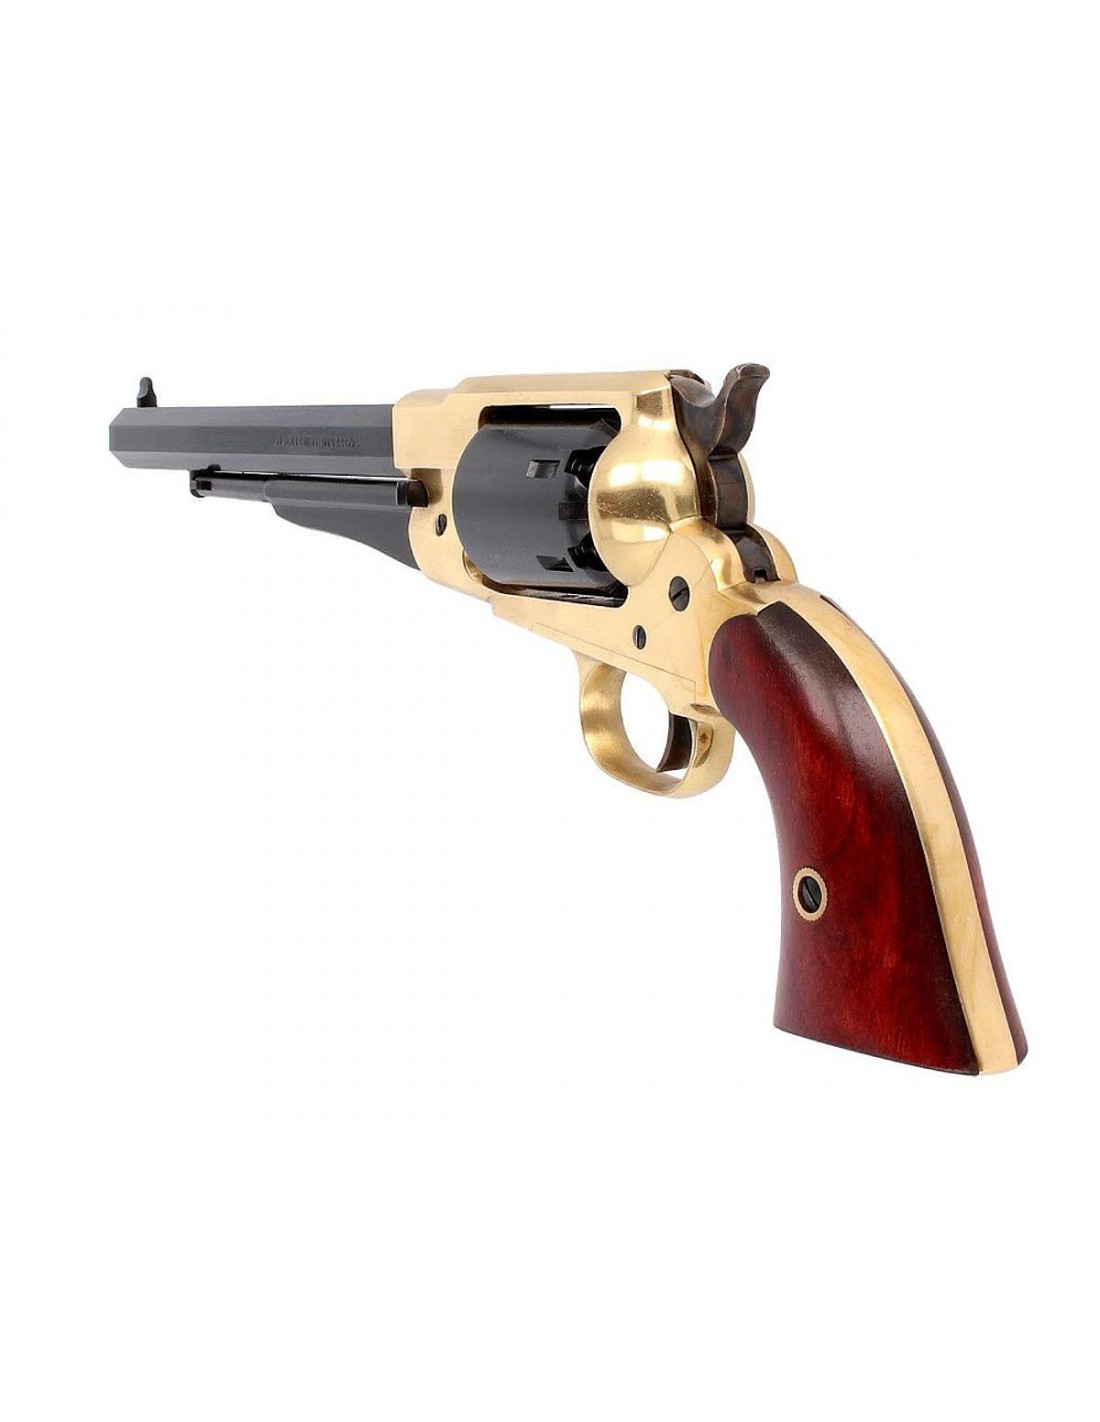 https://www.airsoftgunbcm.com/7119-thickbox_default/revolver-1858-remington-deluxe-poudre-noire-cal-44.jpg